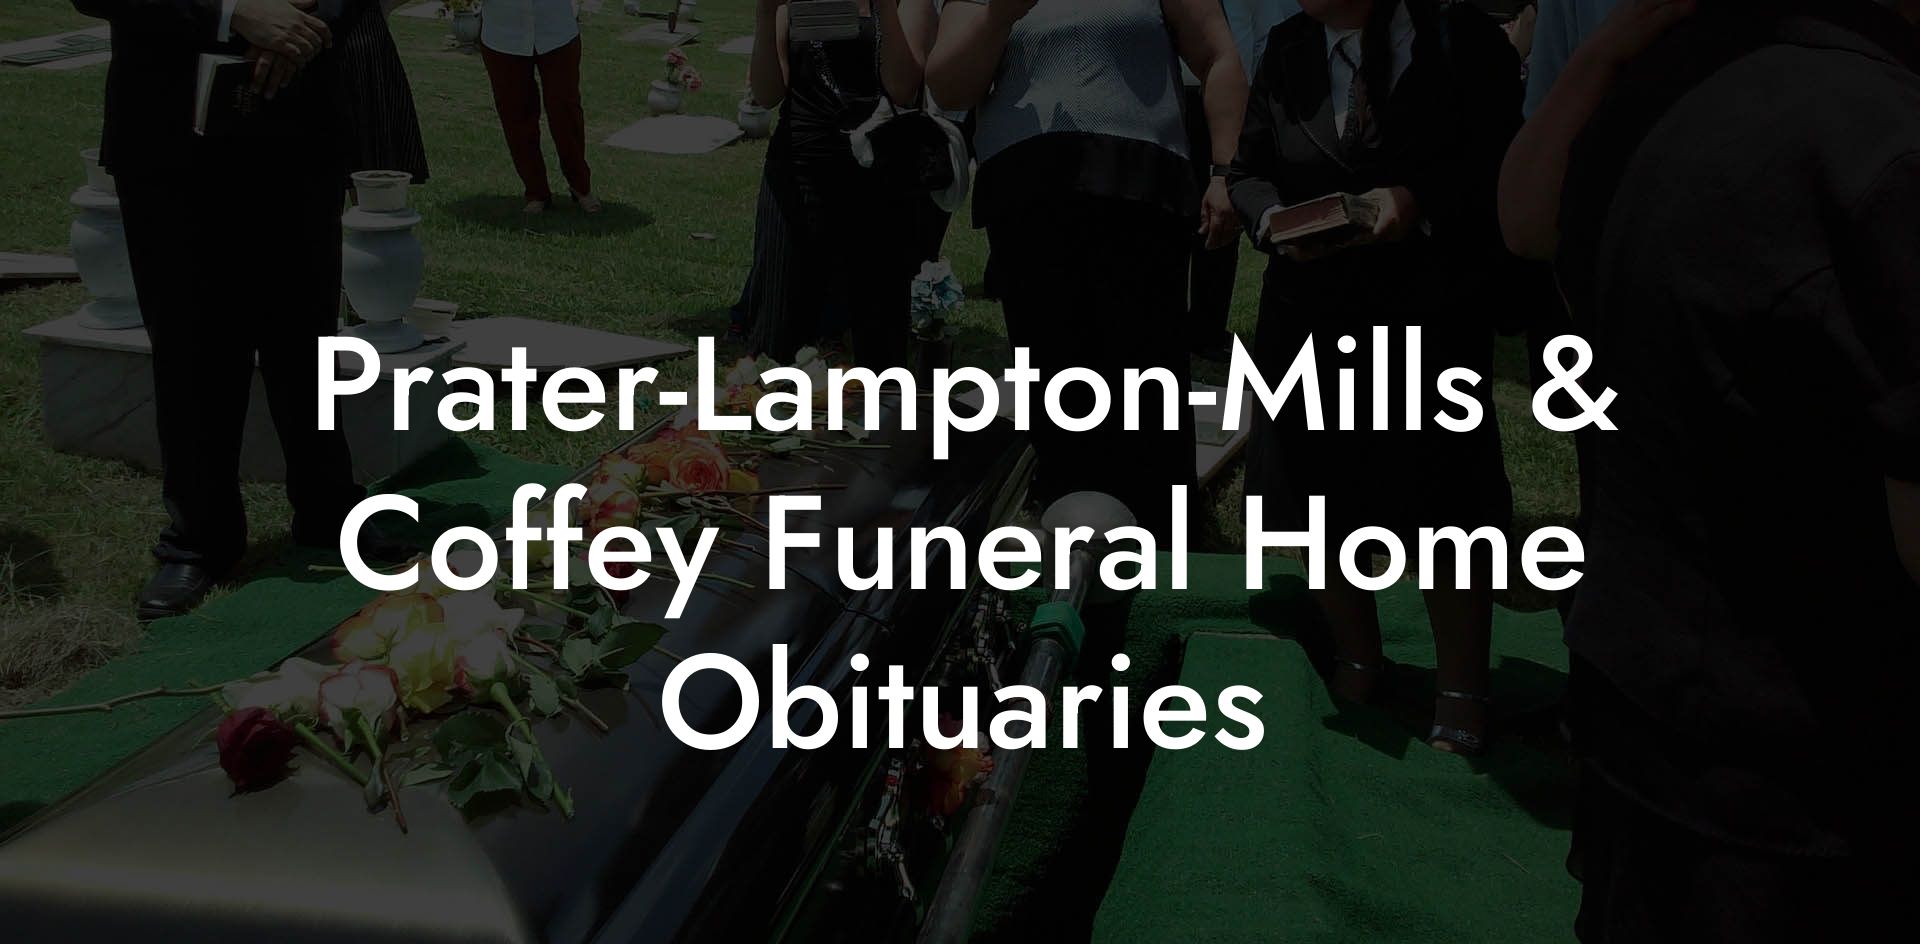 Prater-Lampton-Mills & Coffey Funeral Home Obituaries